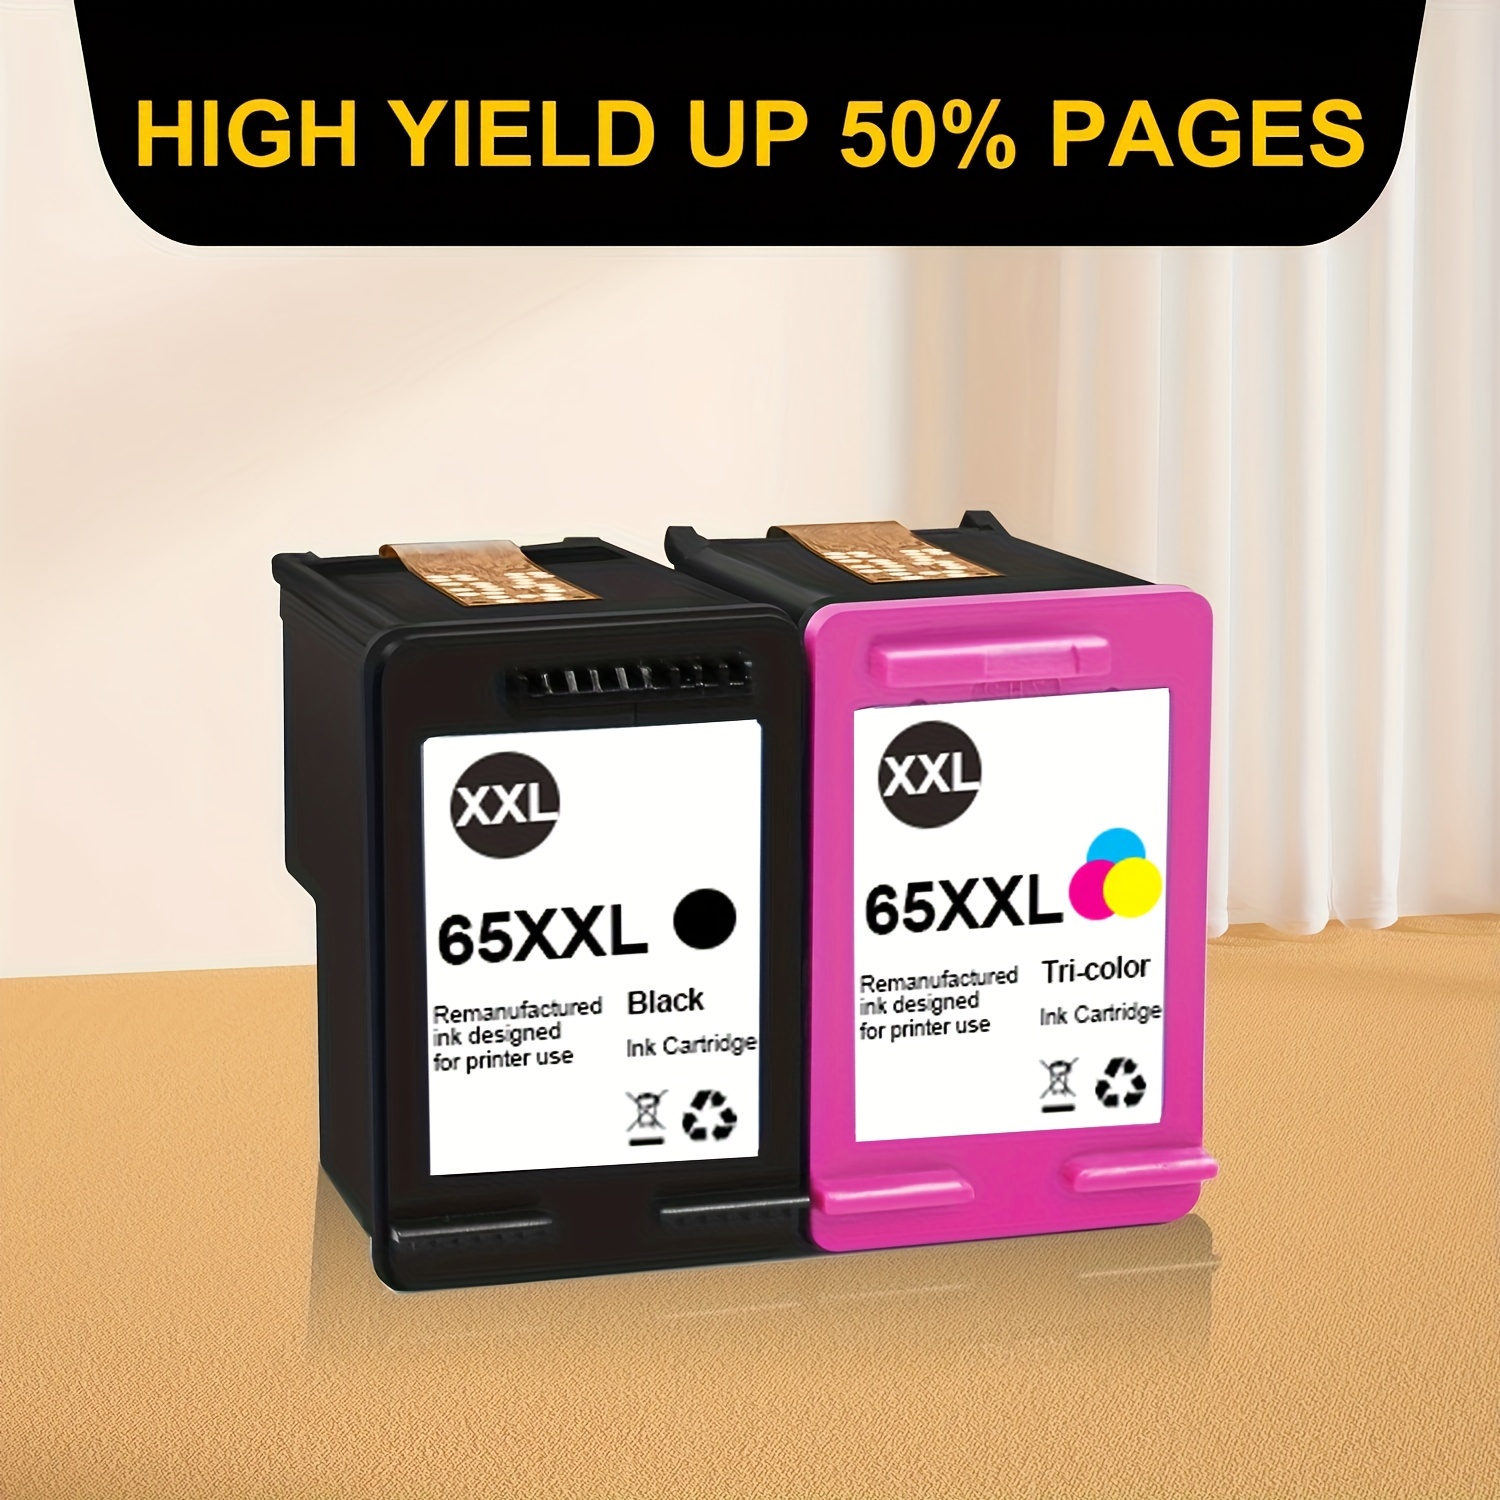 Ink Cartridges Replacement for HP 305XL, Black/Color Print Cartridges for  DeskJet Plus 4120 4122 4125 4130 4132 4133 4135 4136 4140 4152 4155 4158